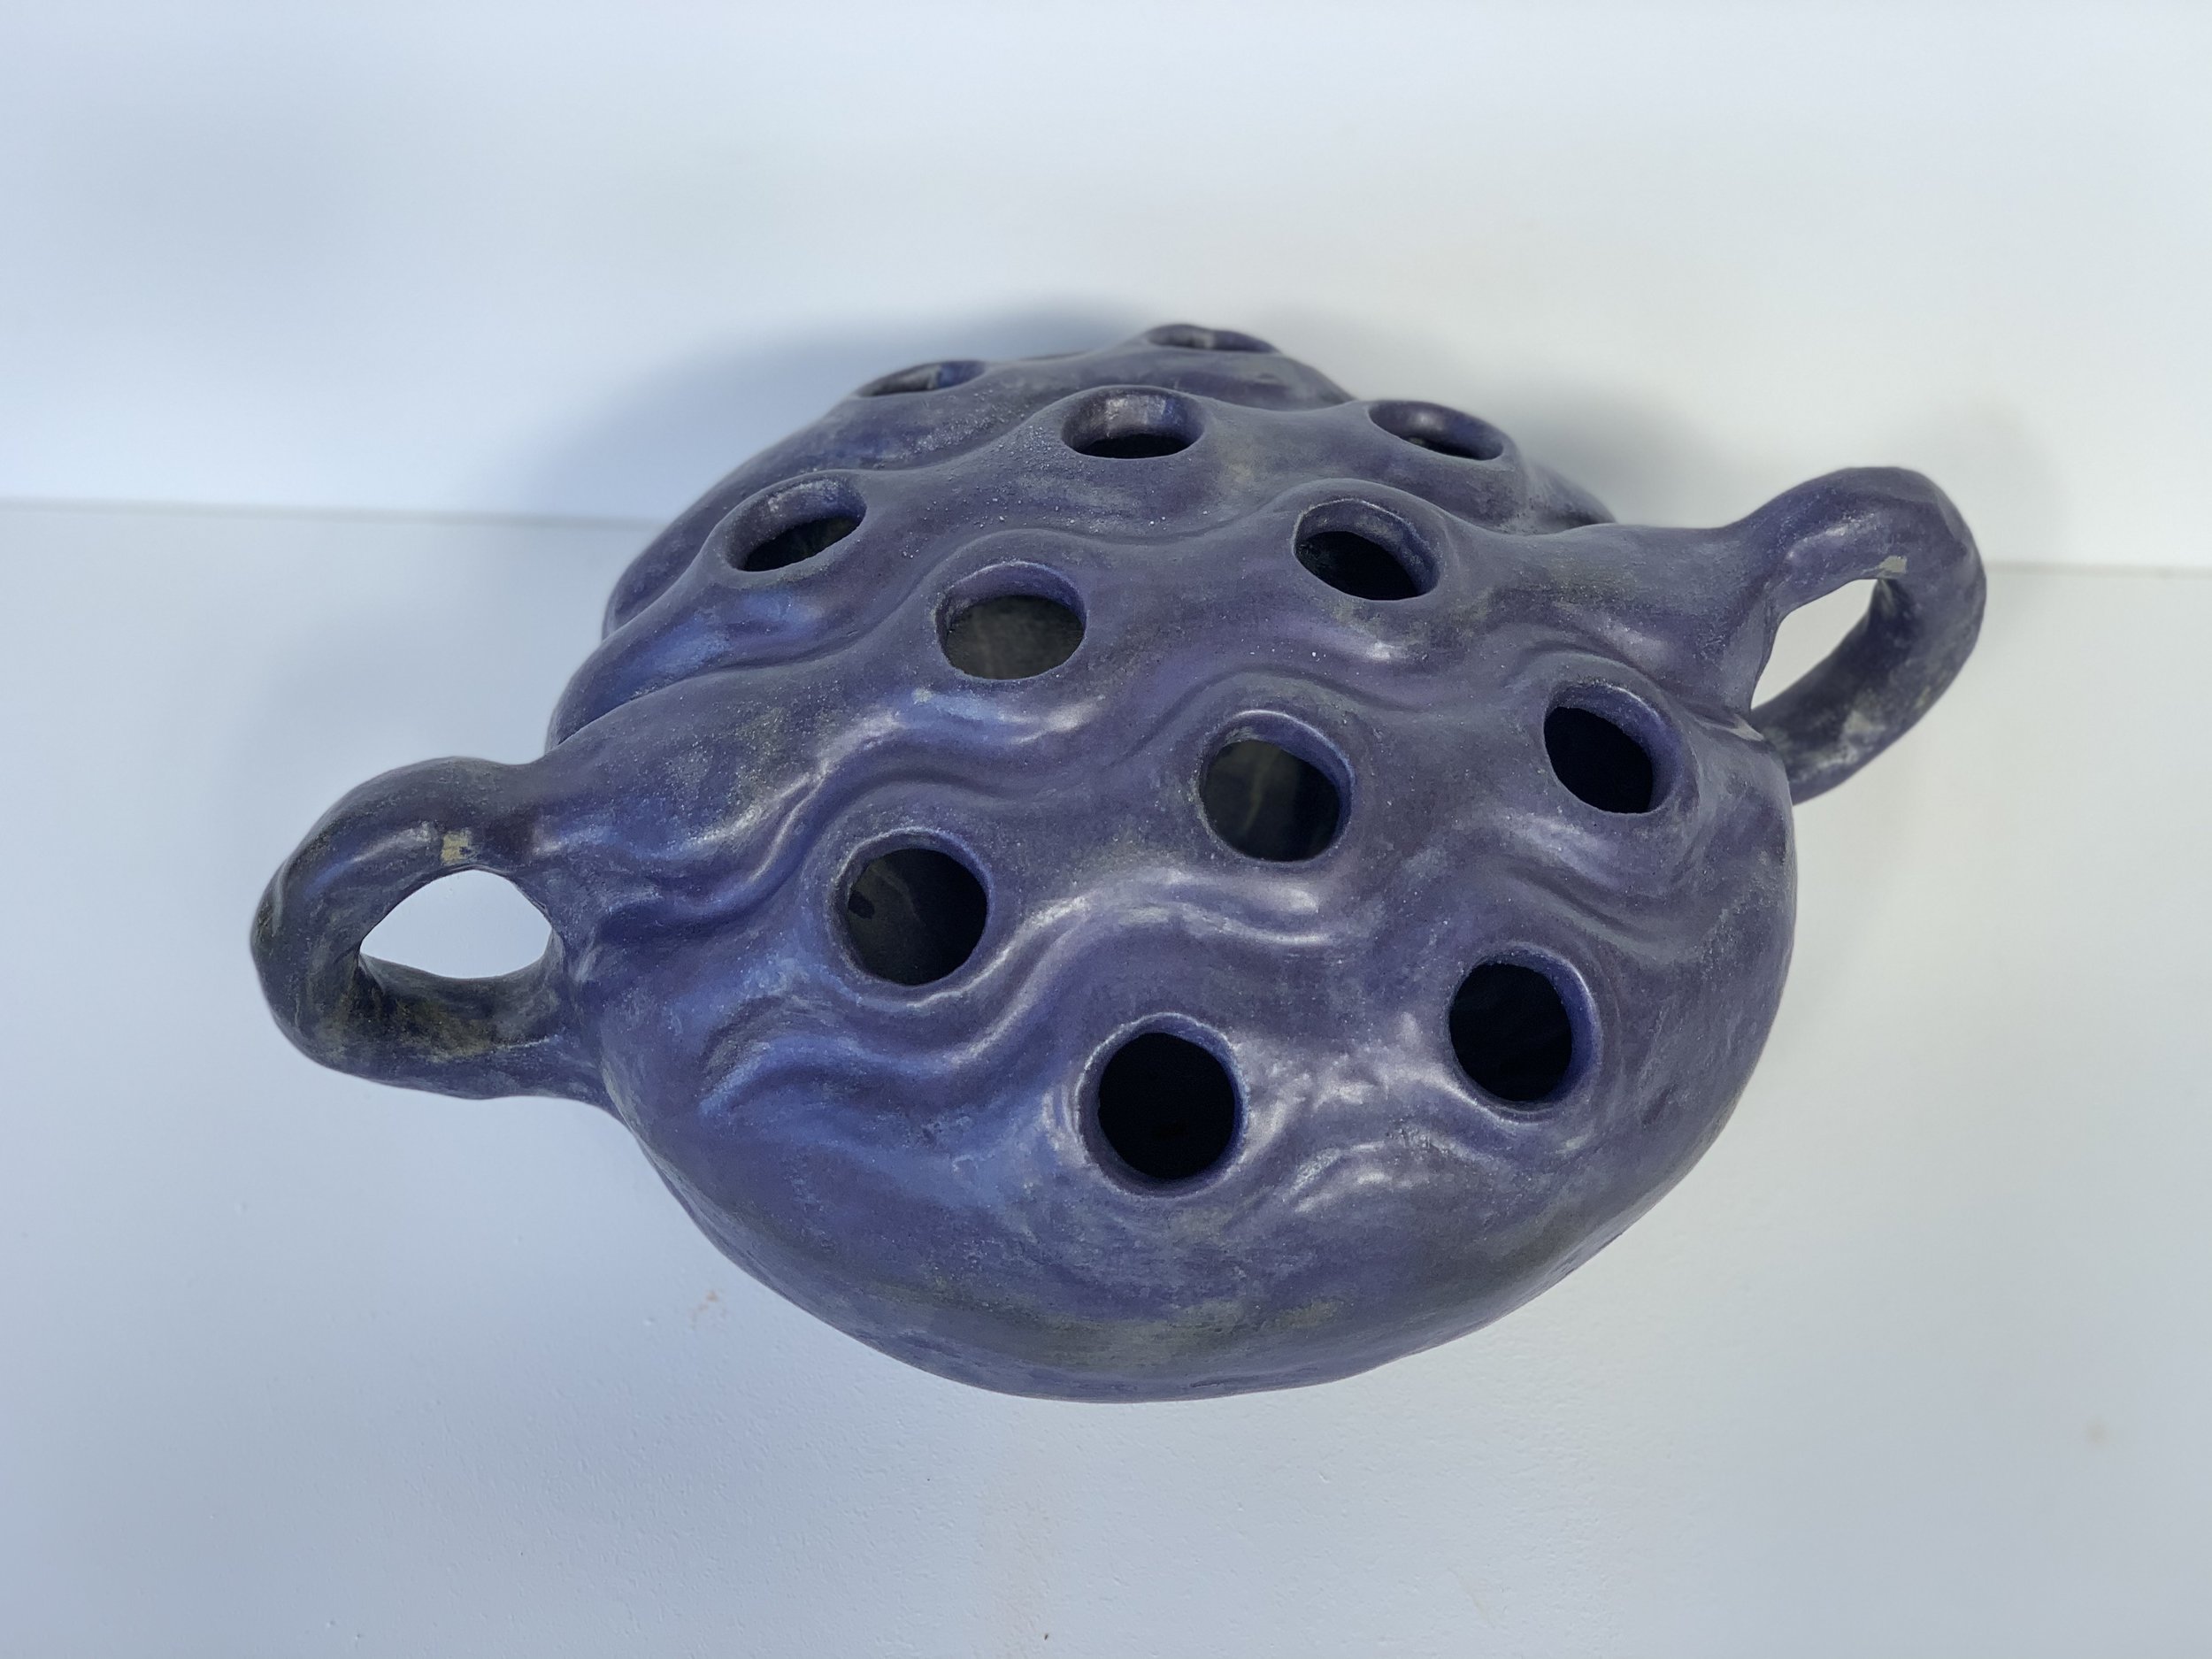 curling stone or vase